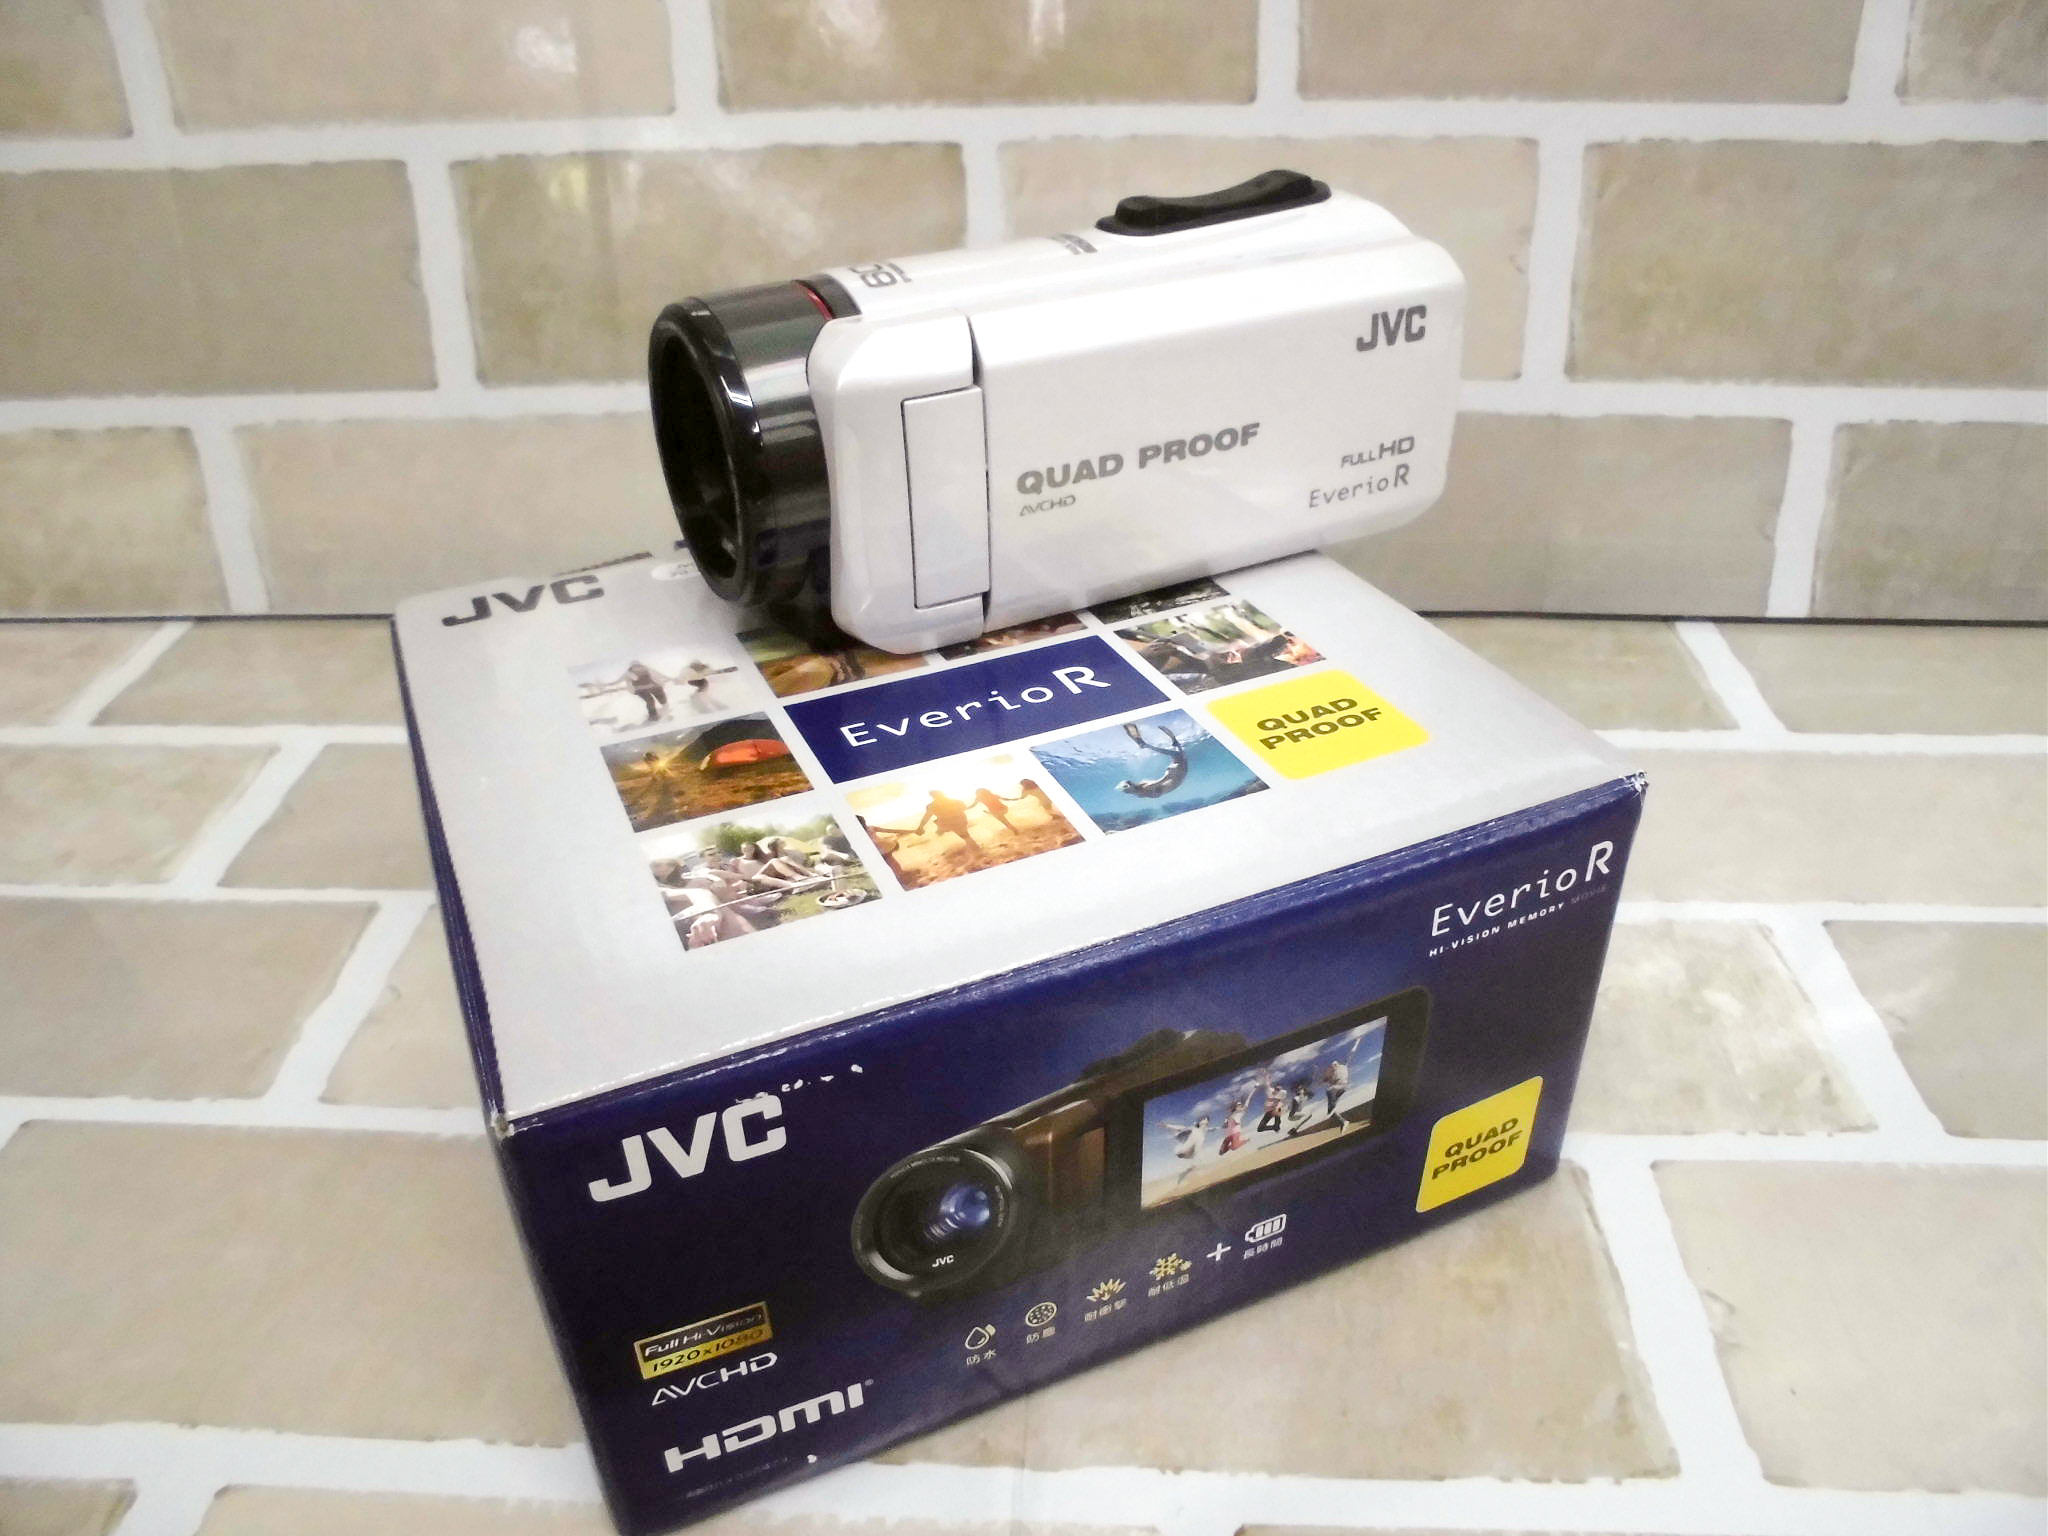 JVC ビデオカメラ Everio R 防水5m 防塵仕様 耐低温 耐衝撃 内蔵メモリー32GB パールホワイト GZ-R400-W